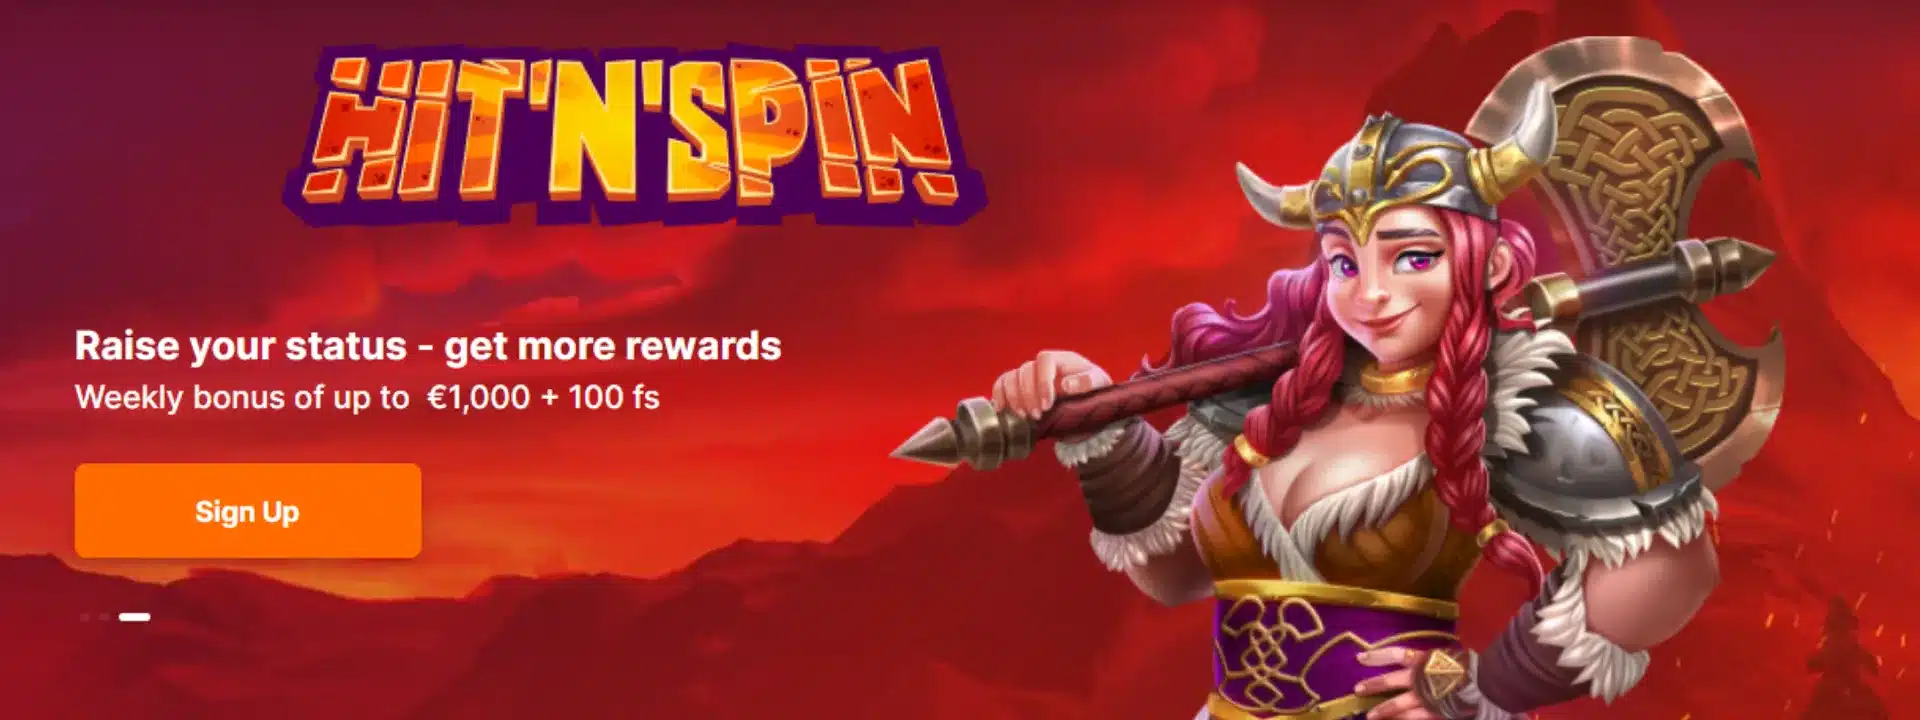 Claim Exciting Weekly Bonuses at Hit'nSpin